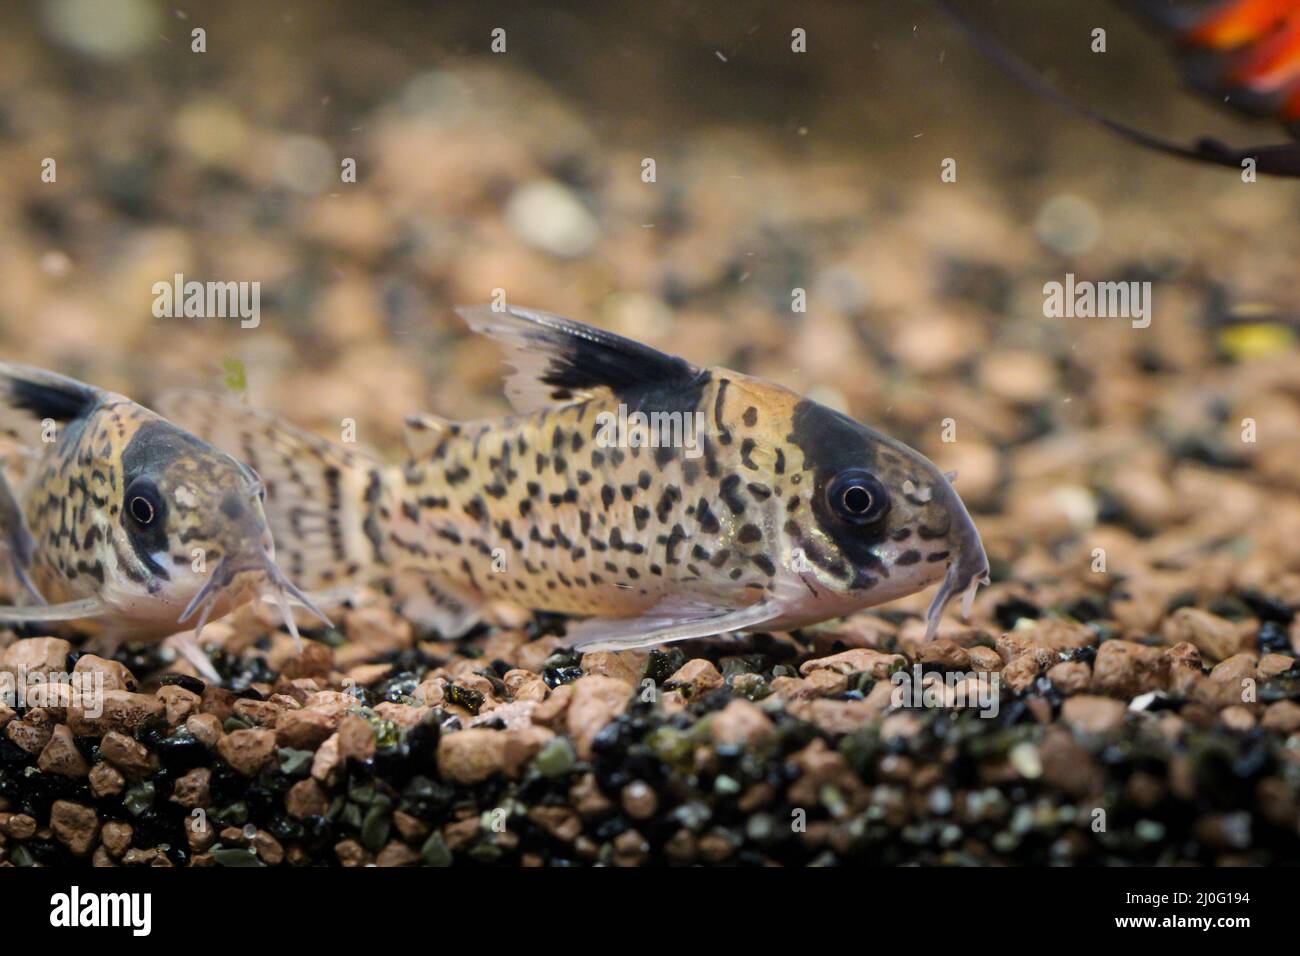 Black aquarium gravel hi-res stock photography and images - Alamy